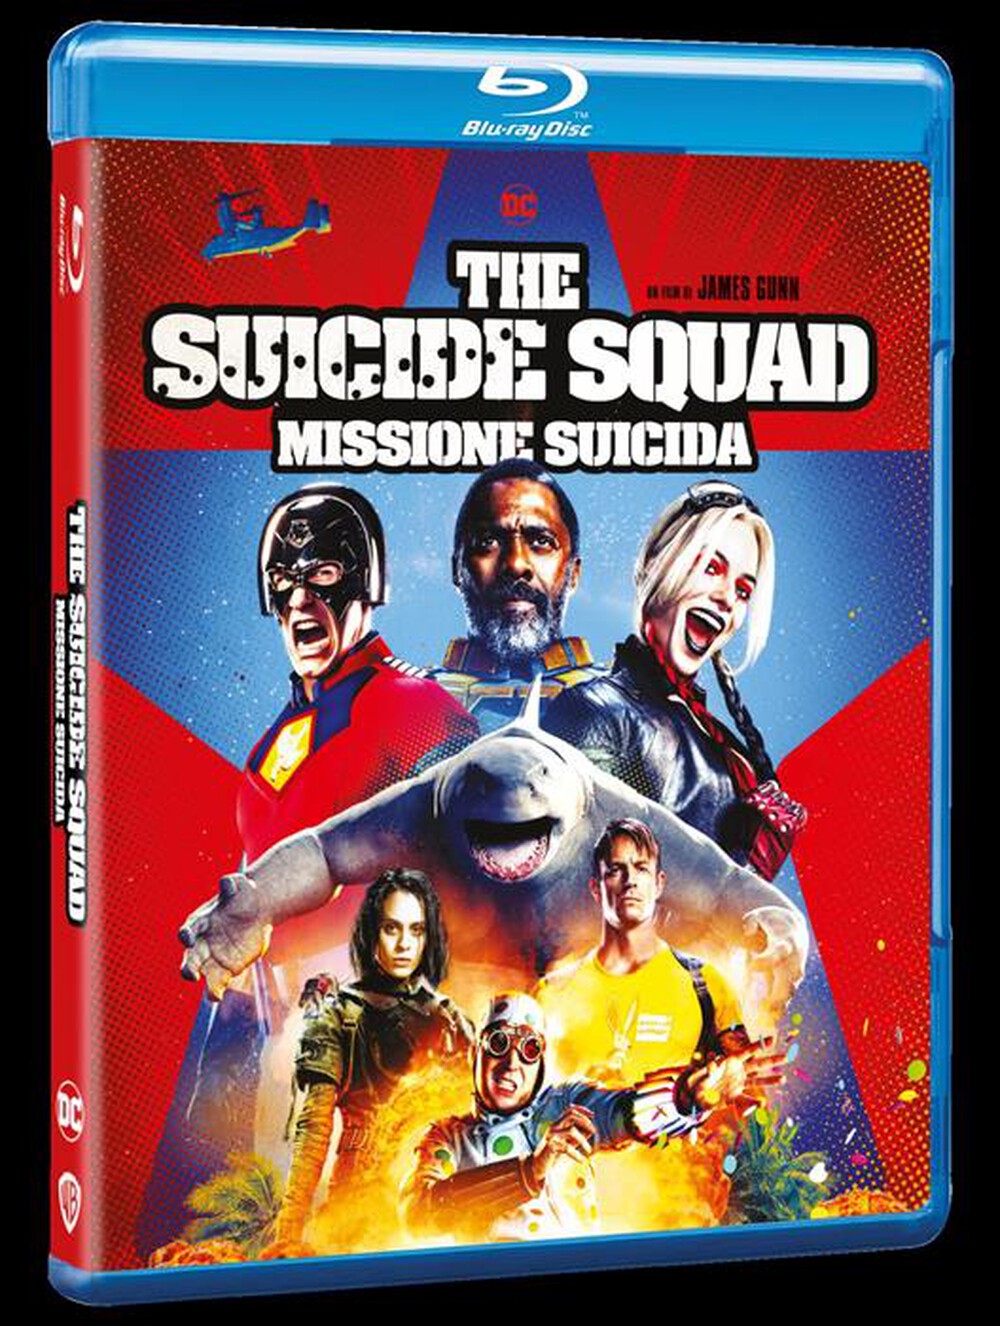 "WARNER HOME VIDEO - Suicide Squad (The) - Missione Suicida"